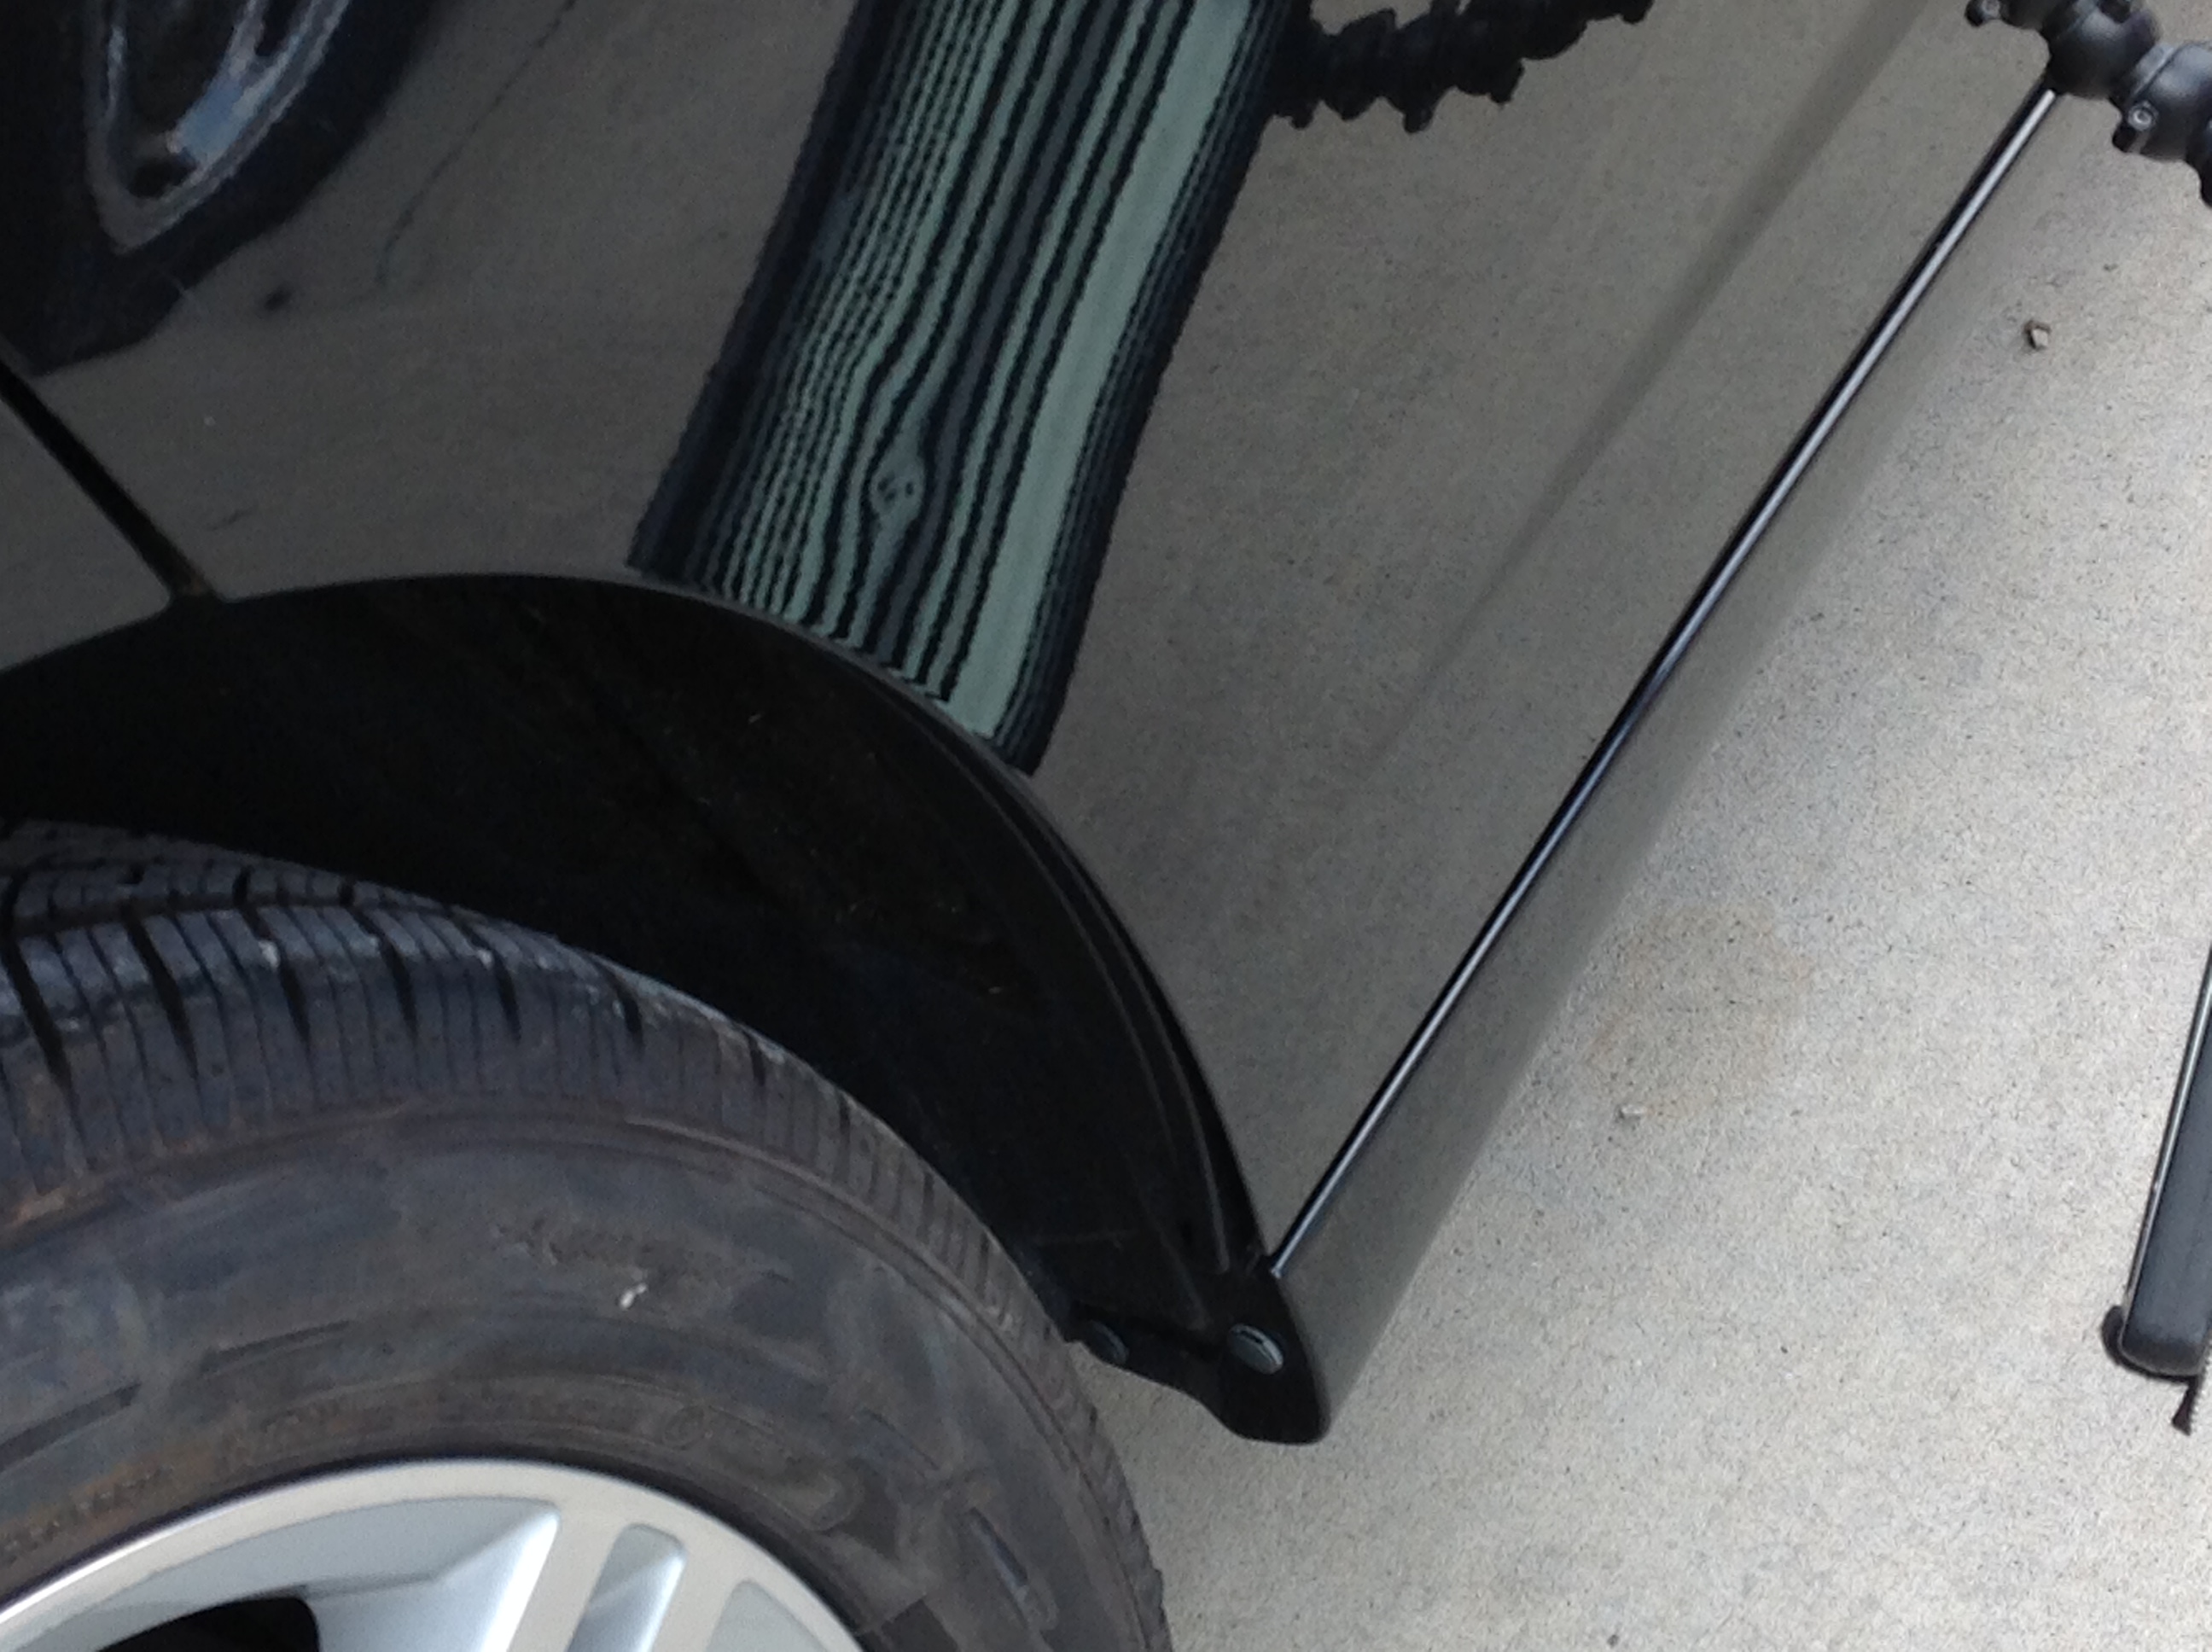 2011 Dodge Charger Passenger Rear Door Dent Removal, Springfield IL, Taylorville IL, Decatur IL, Mobile Dent Repair http://217dent.com